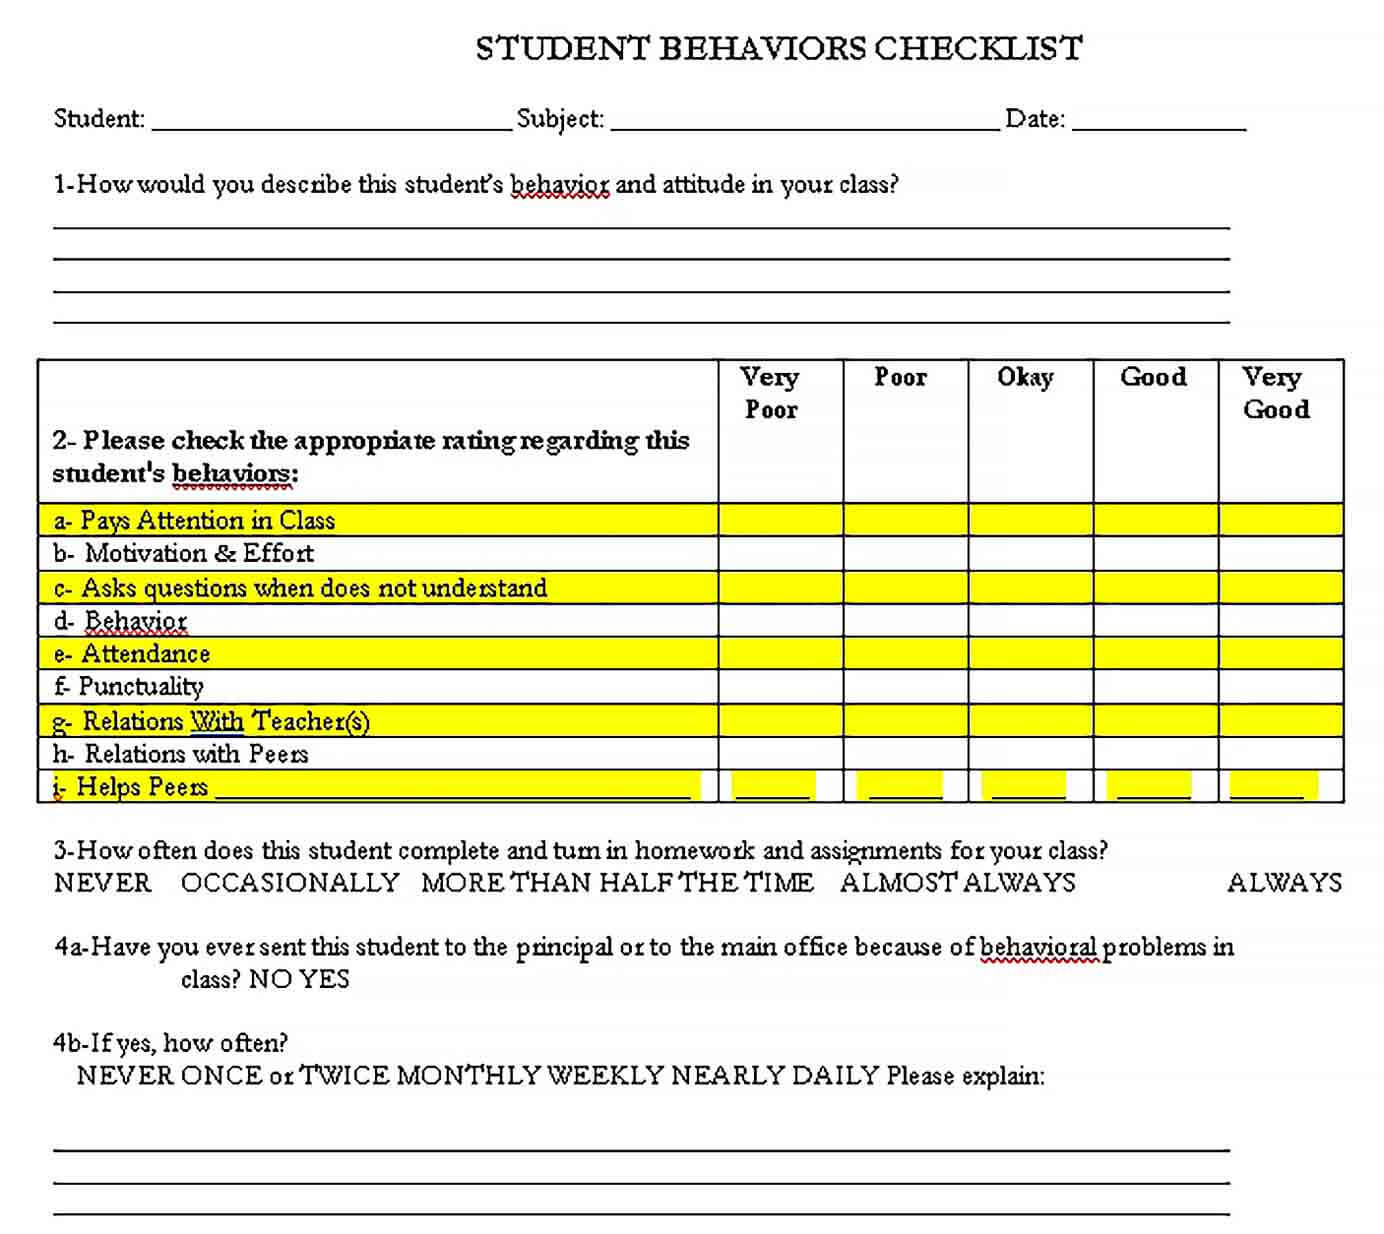 Sample Daily Student Behavior Checklist